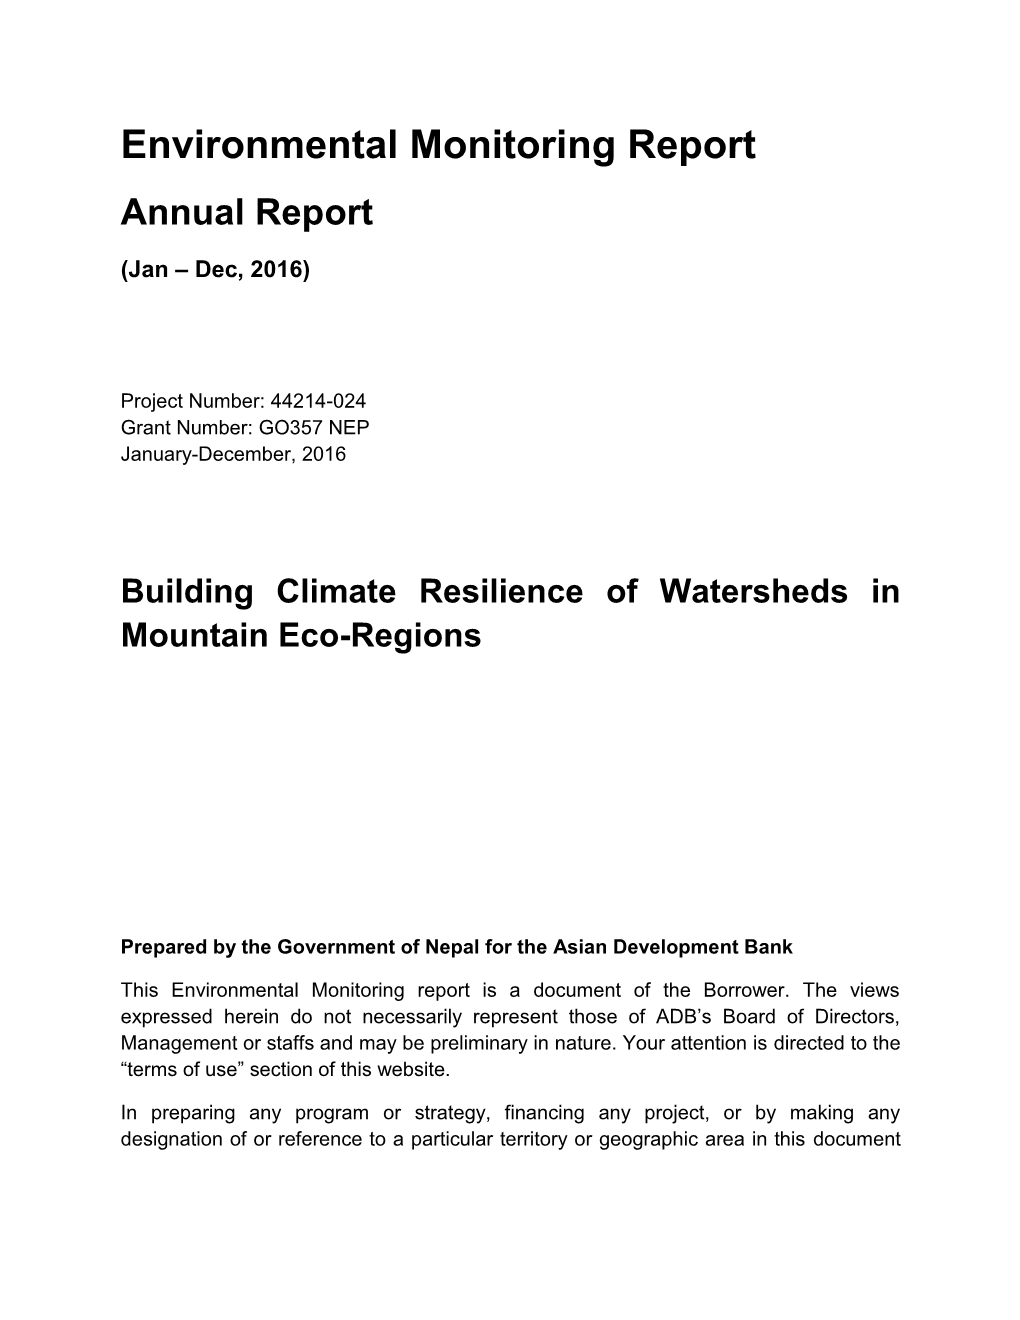 Environmental Monitoring Report Annual Report